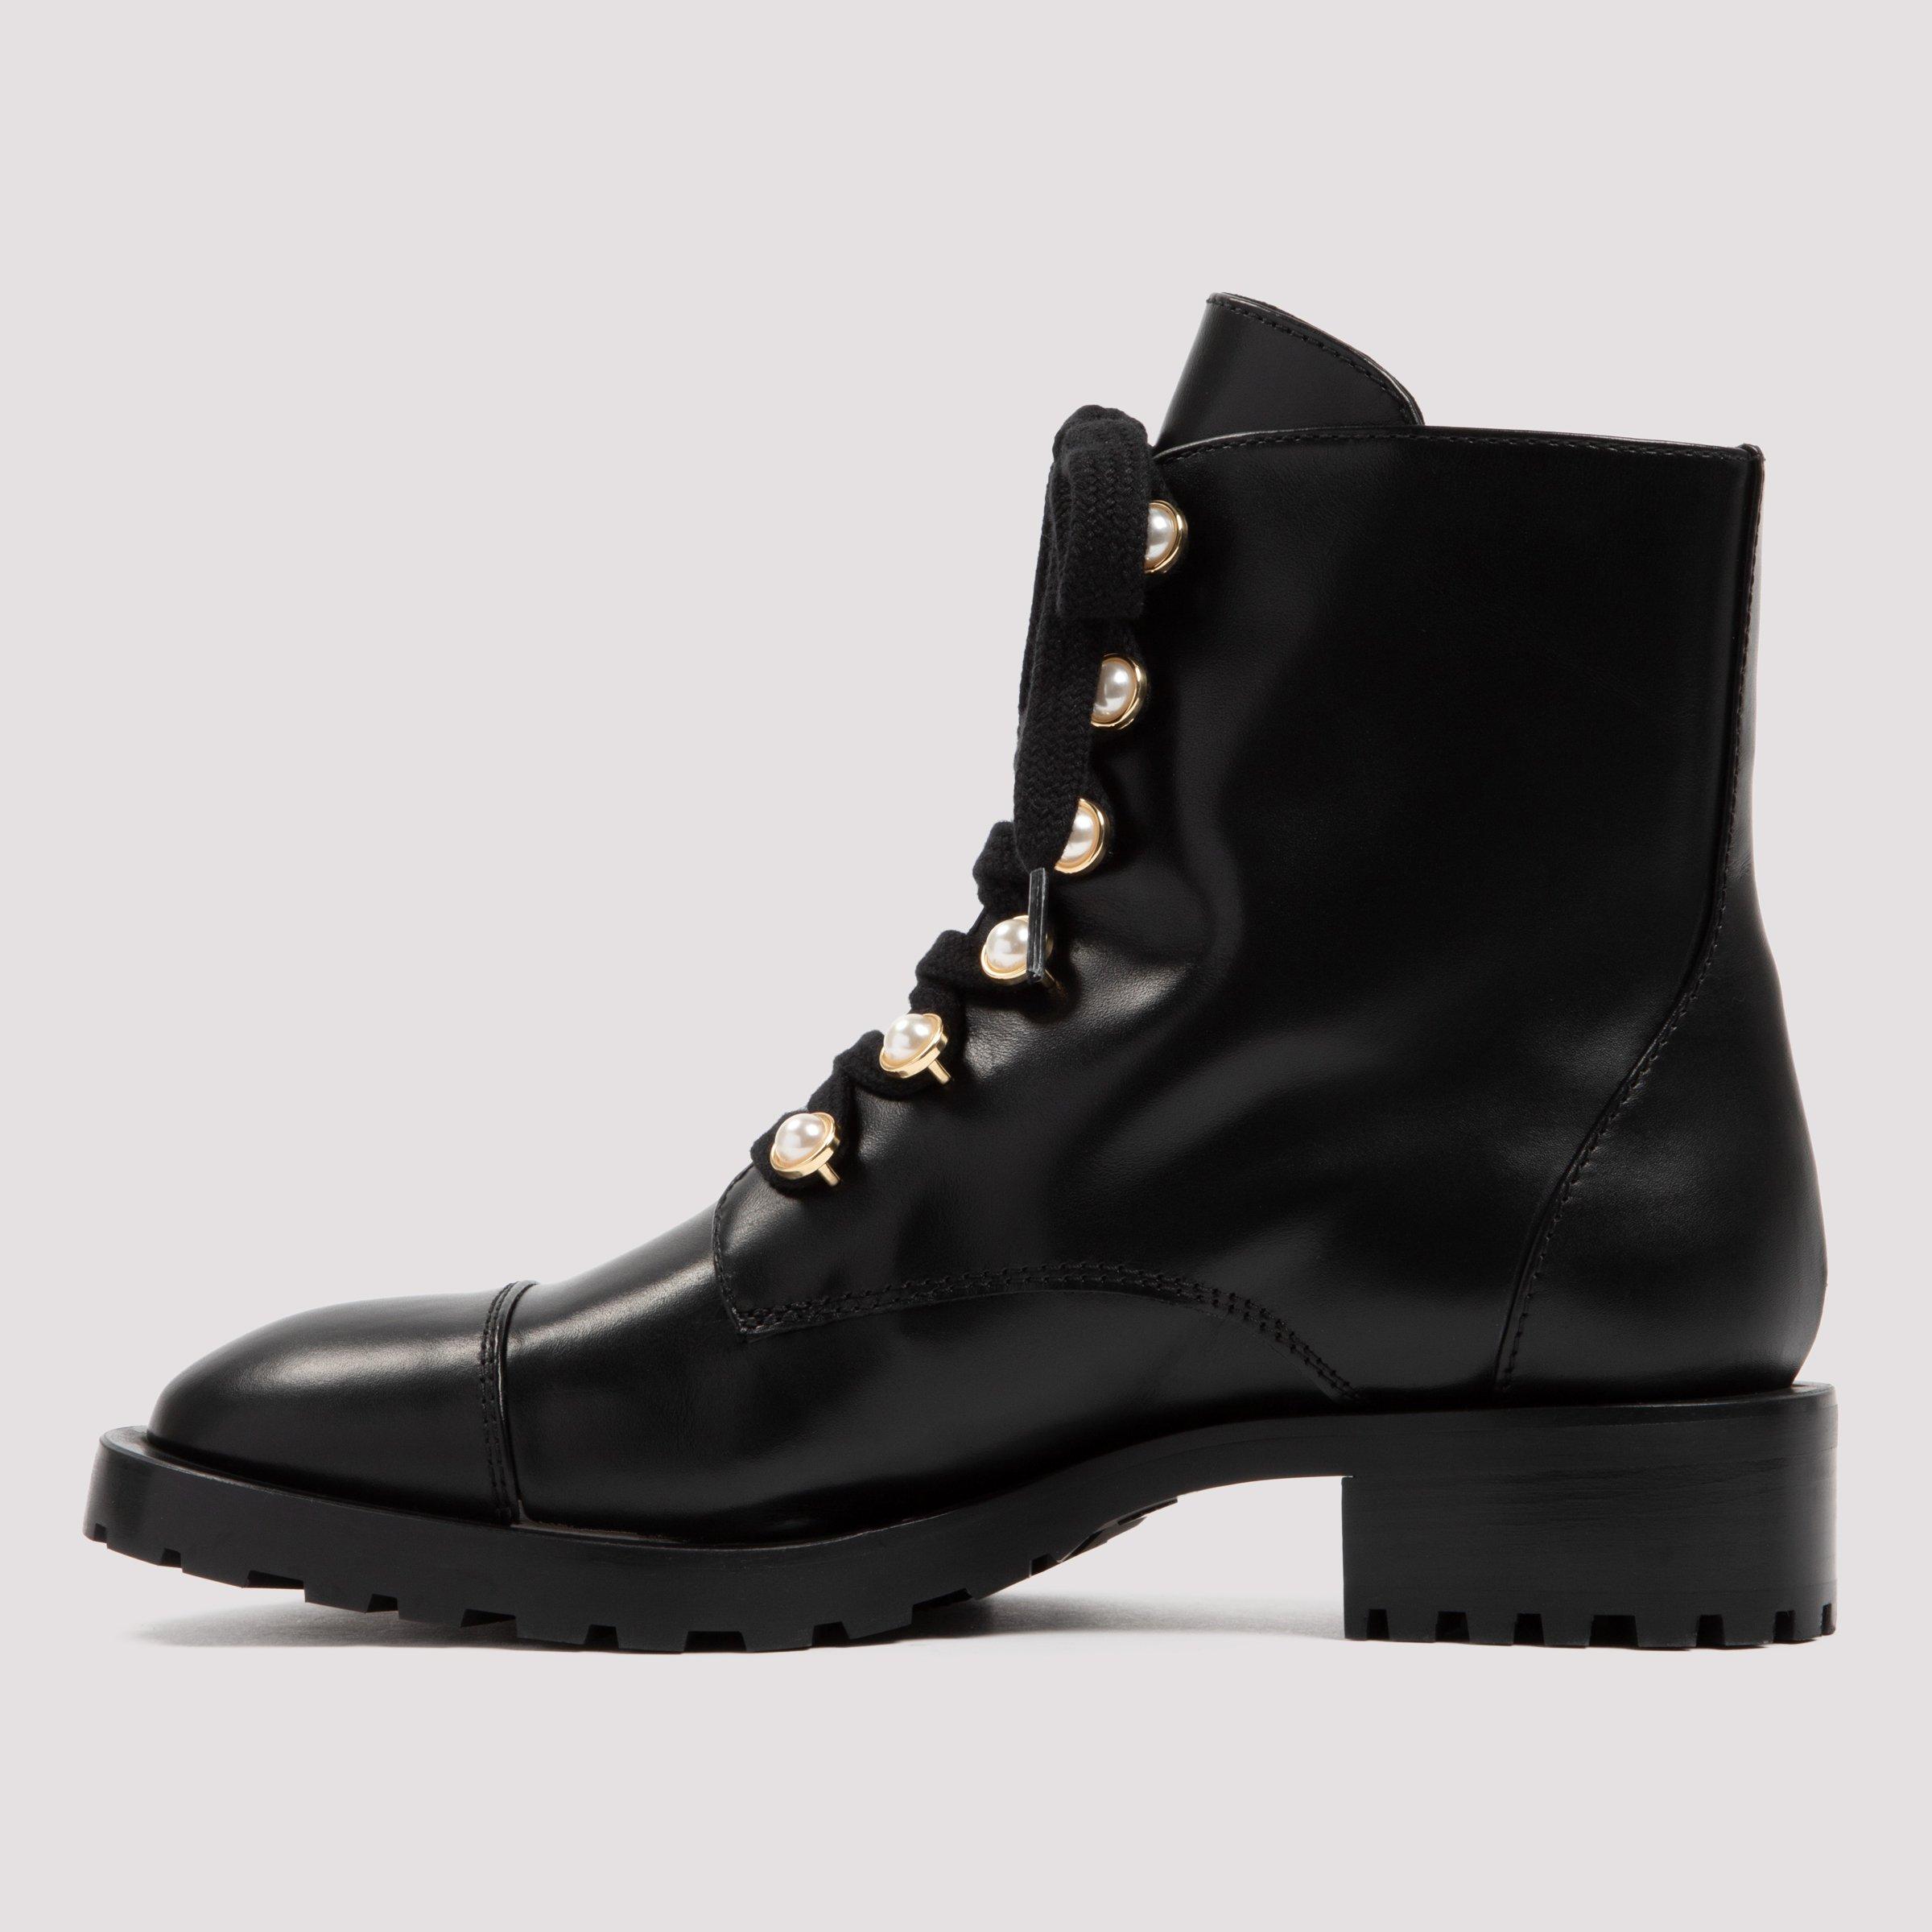 Stuart Weitzman Leather Reysen Combat Boots in Black - Lyst